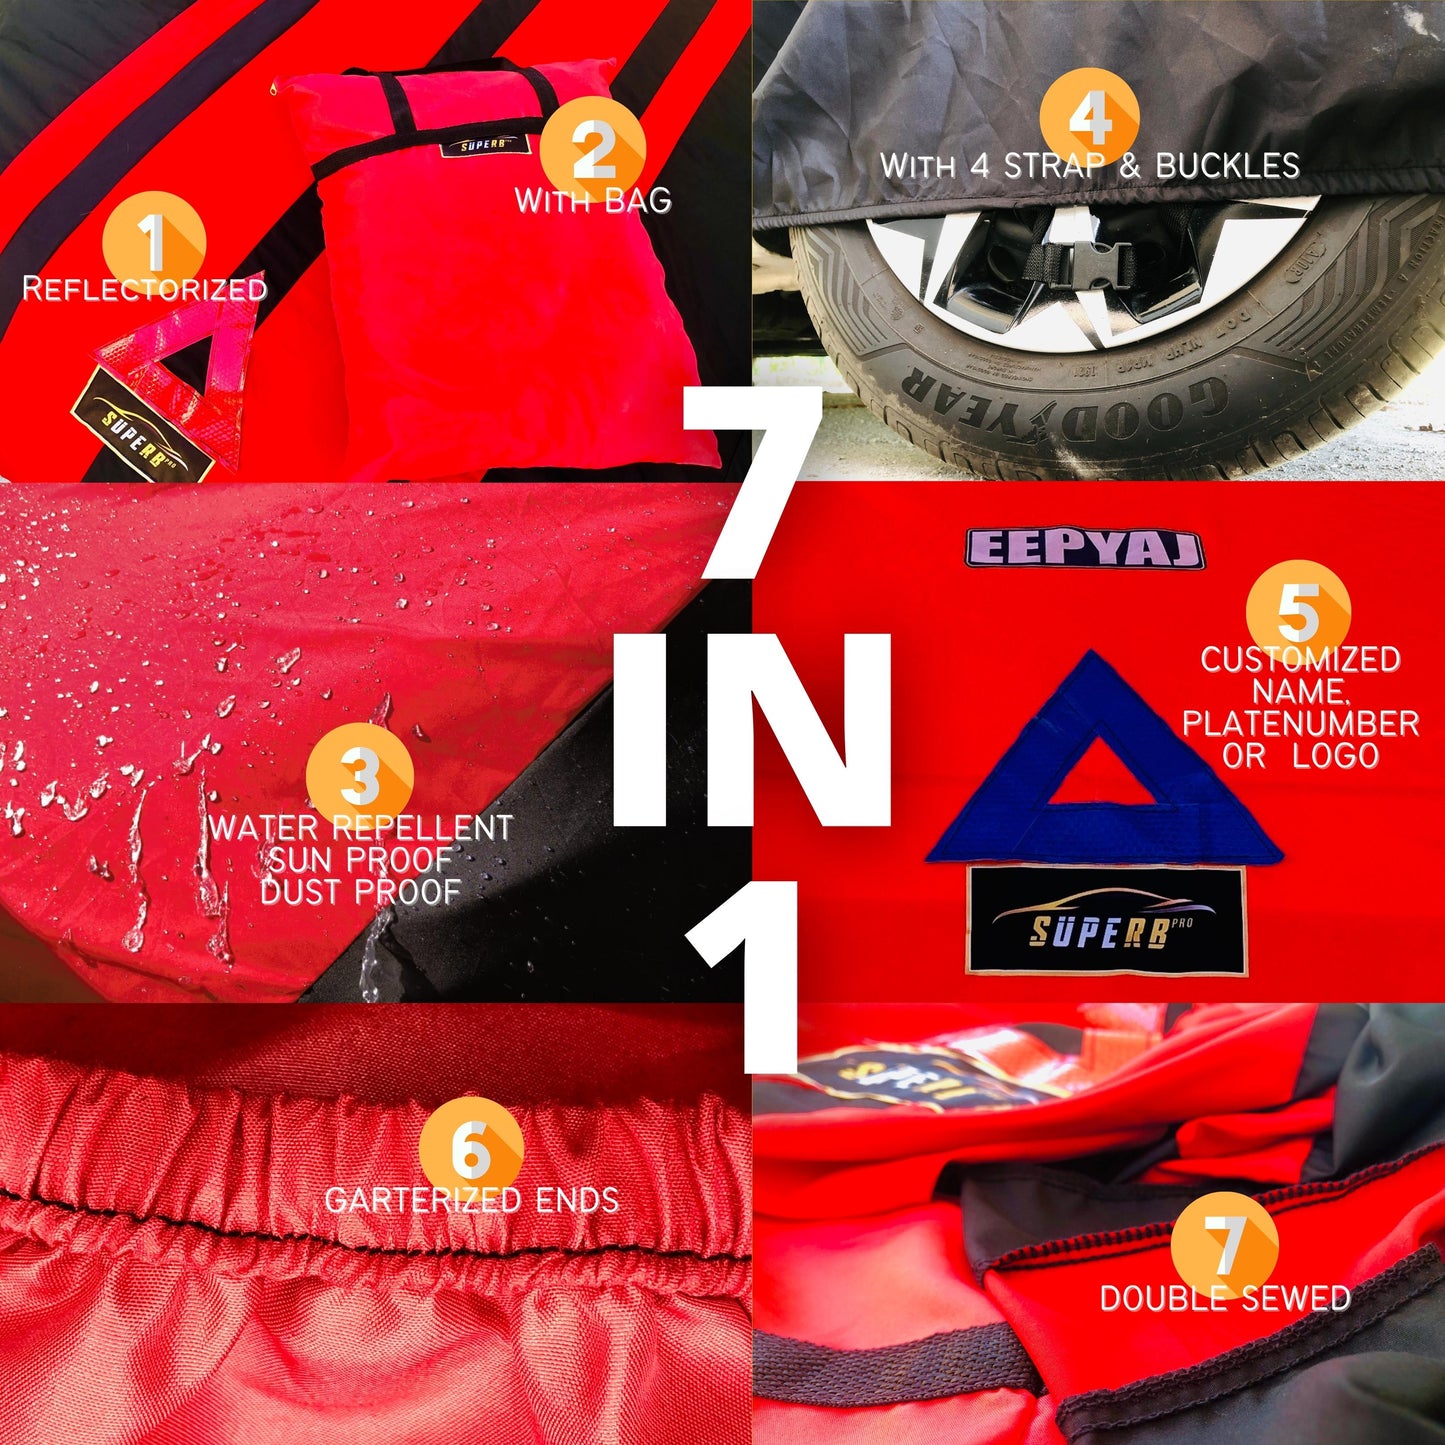 SUPERB Car Cover for SEDAN (Vios/G4/Accent/City/Civic/Dzire/Soluto/Ciaz/Almera/Accord/Lancer/Mazda3)